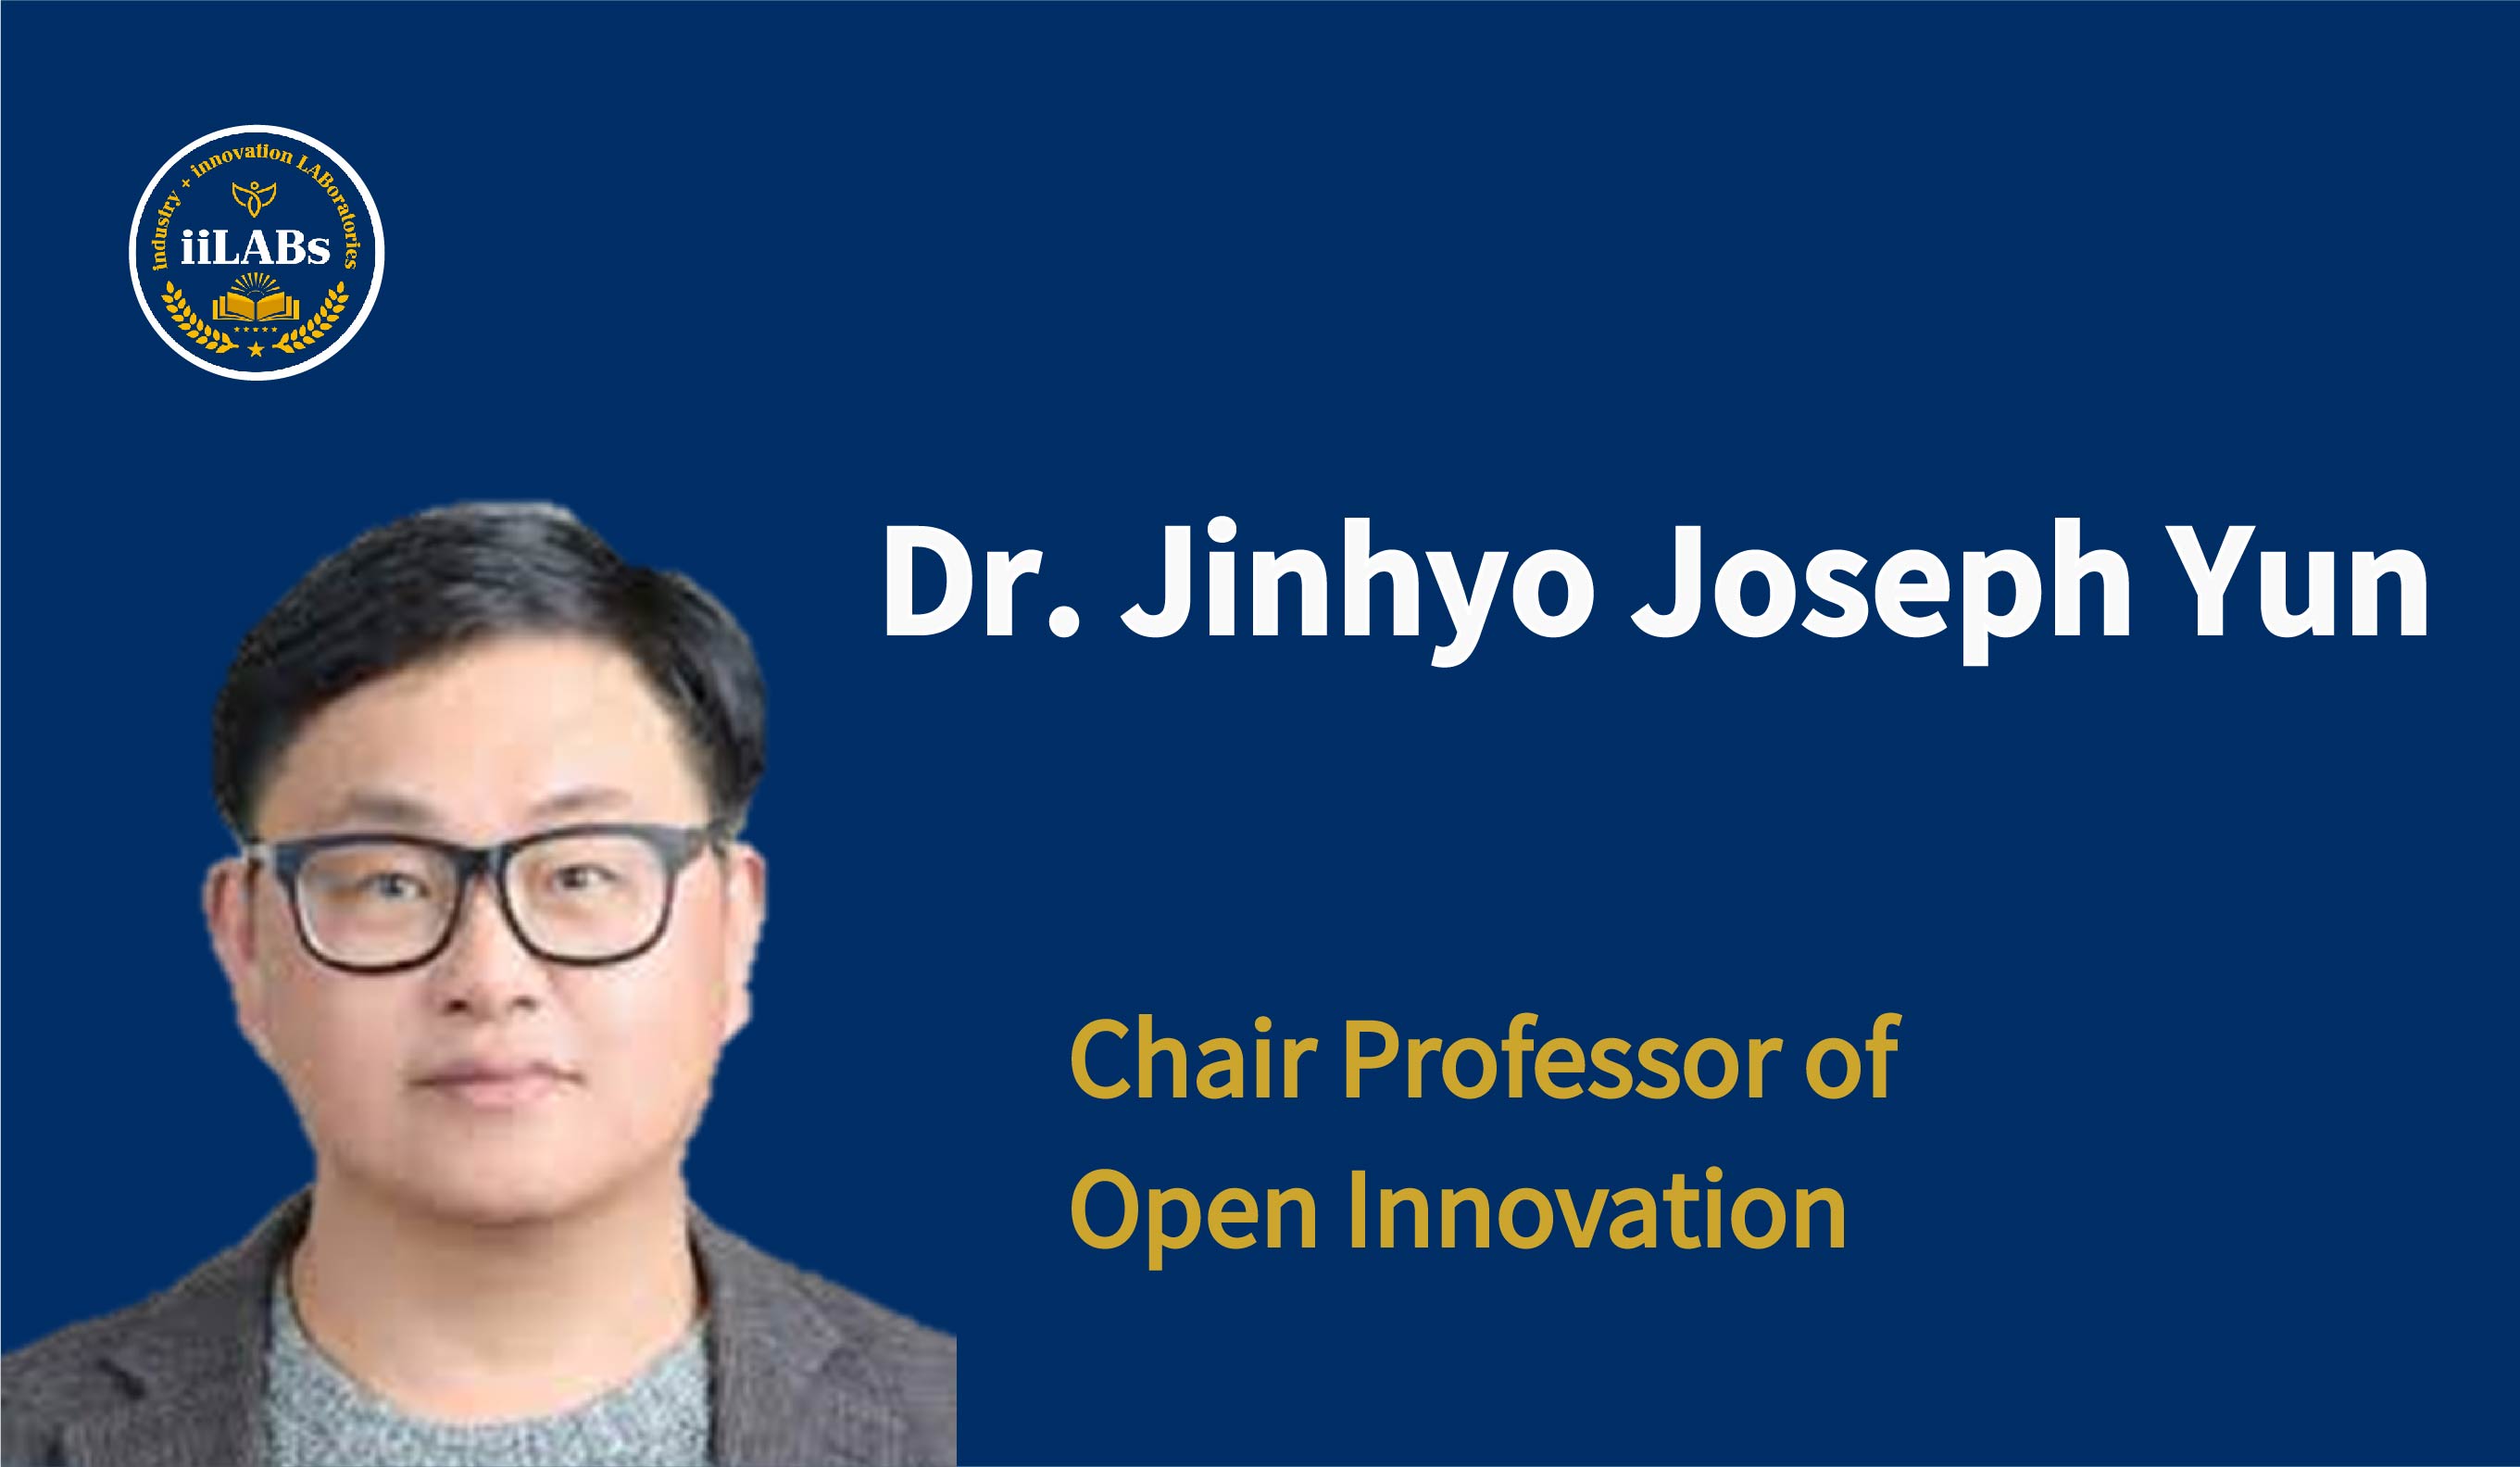 Dr. Jinhyo Joseph Yun, Chair Professor of Open Innovation